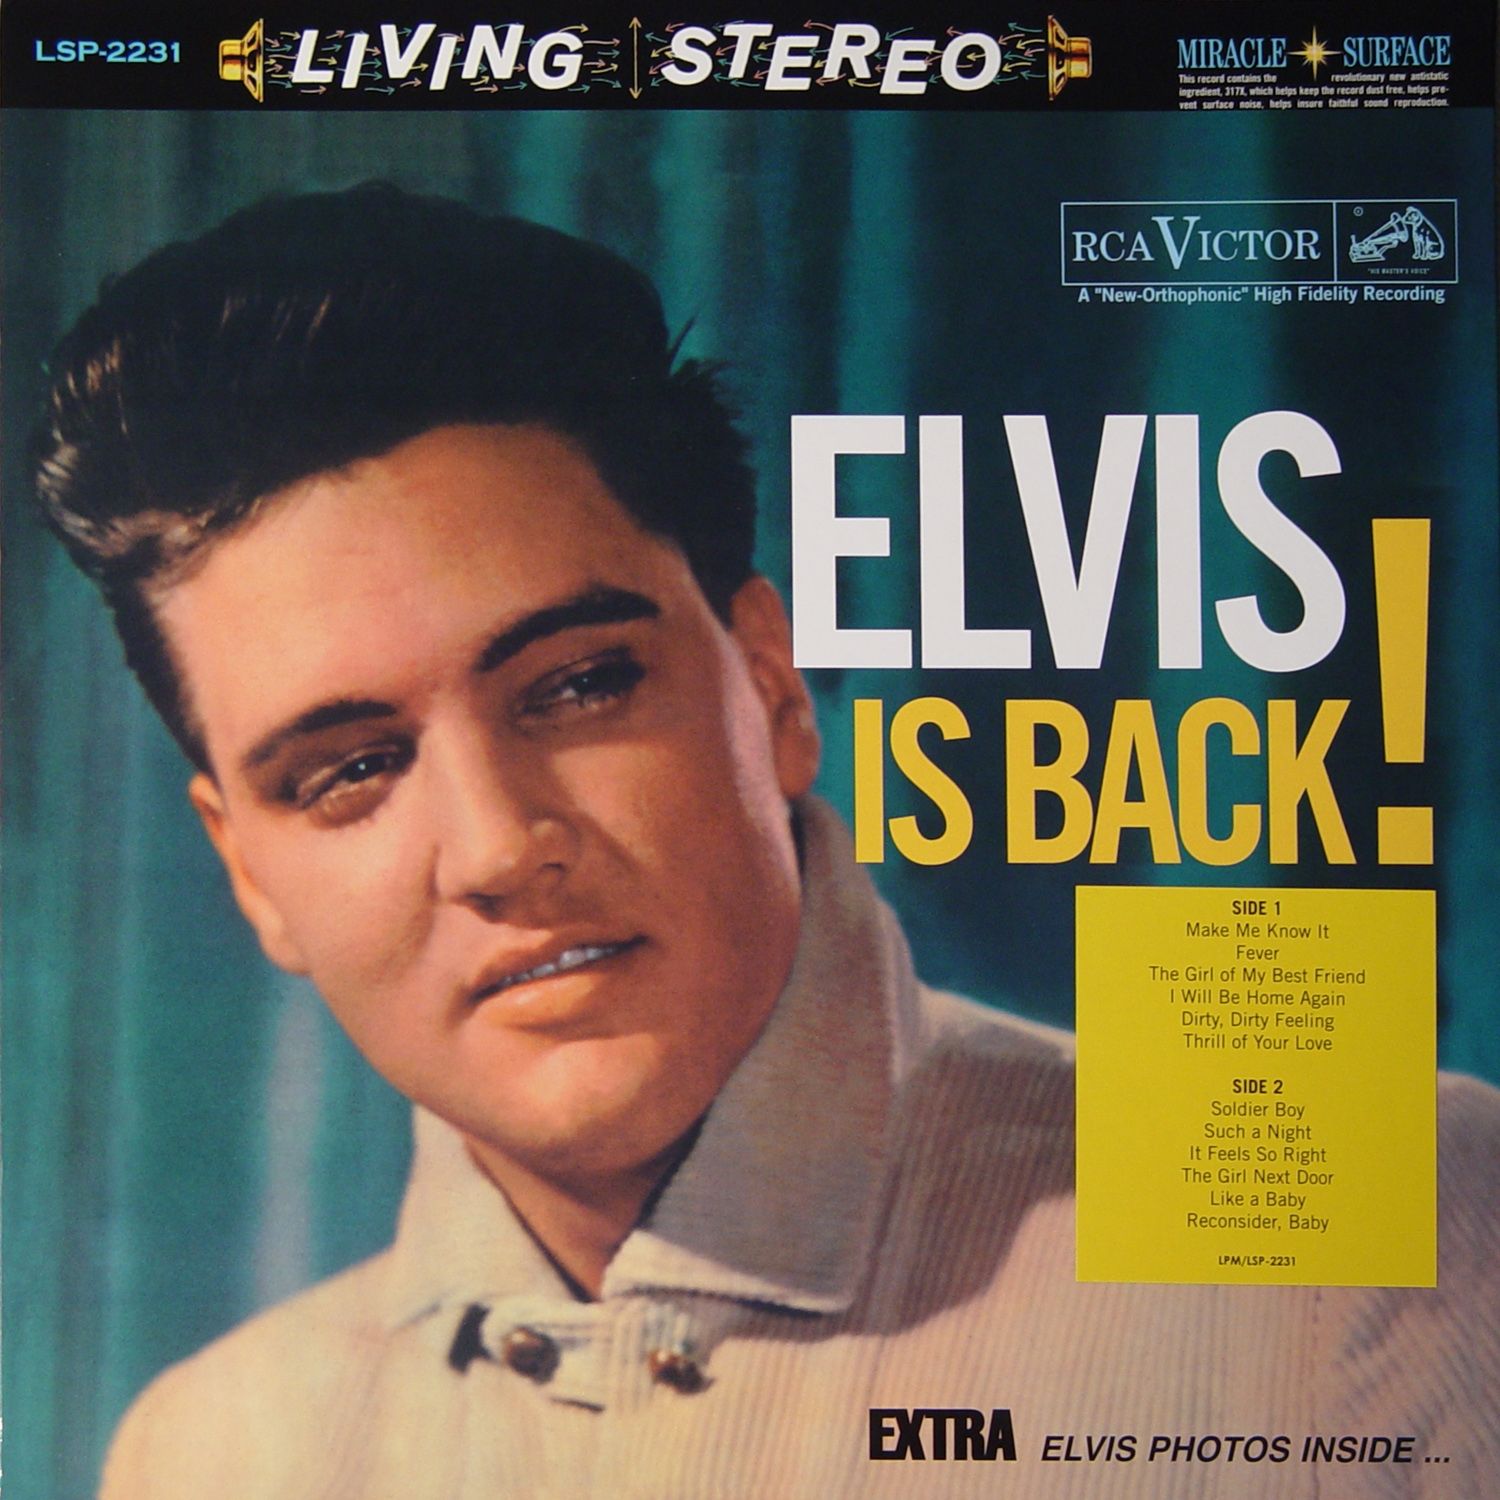 IT FEELS SO RIGHT (TRADUÇÃO) - Elvis Presley 